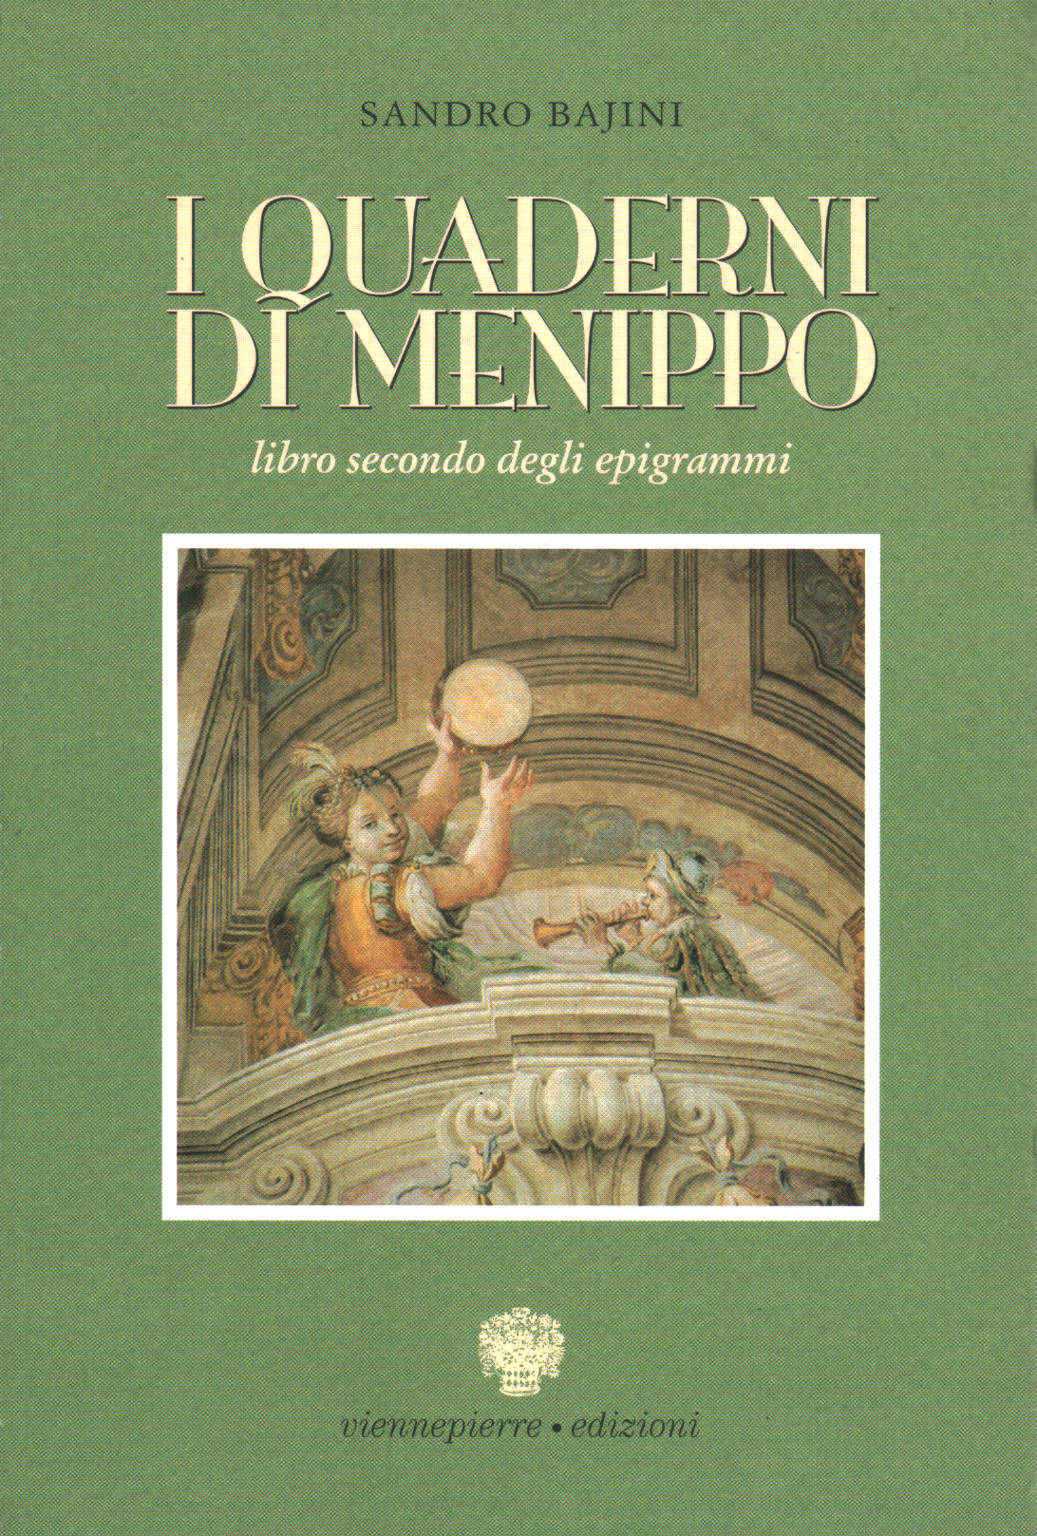 Les carnets de Menippo, Sandro Bajini